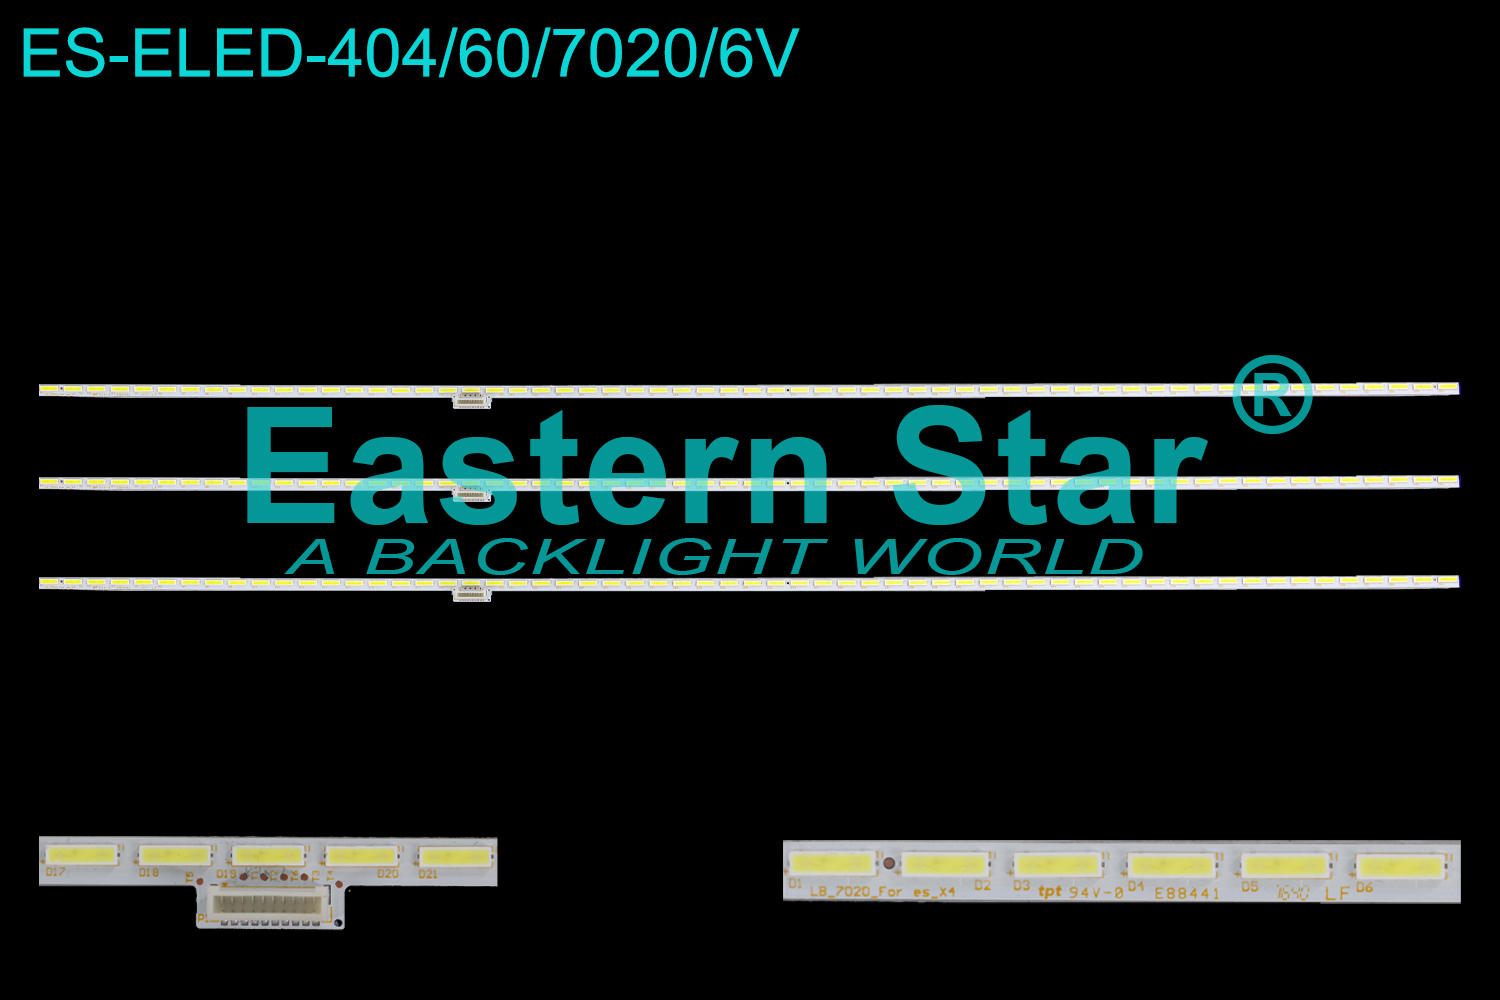 ES-ELED-404 ELED/EDGE TV backlight use for 75'' Sony  XBR-75X850D XBR-75X850D-LED-BAR,  LB_7020_For es_X4,  73.75S08.D02-3-DX1 LED STRIPS(3)